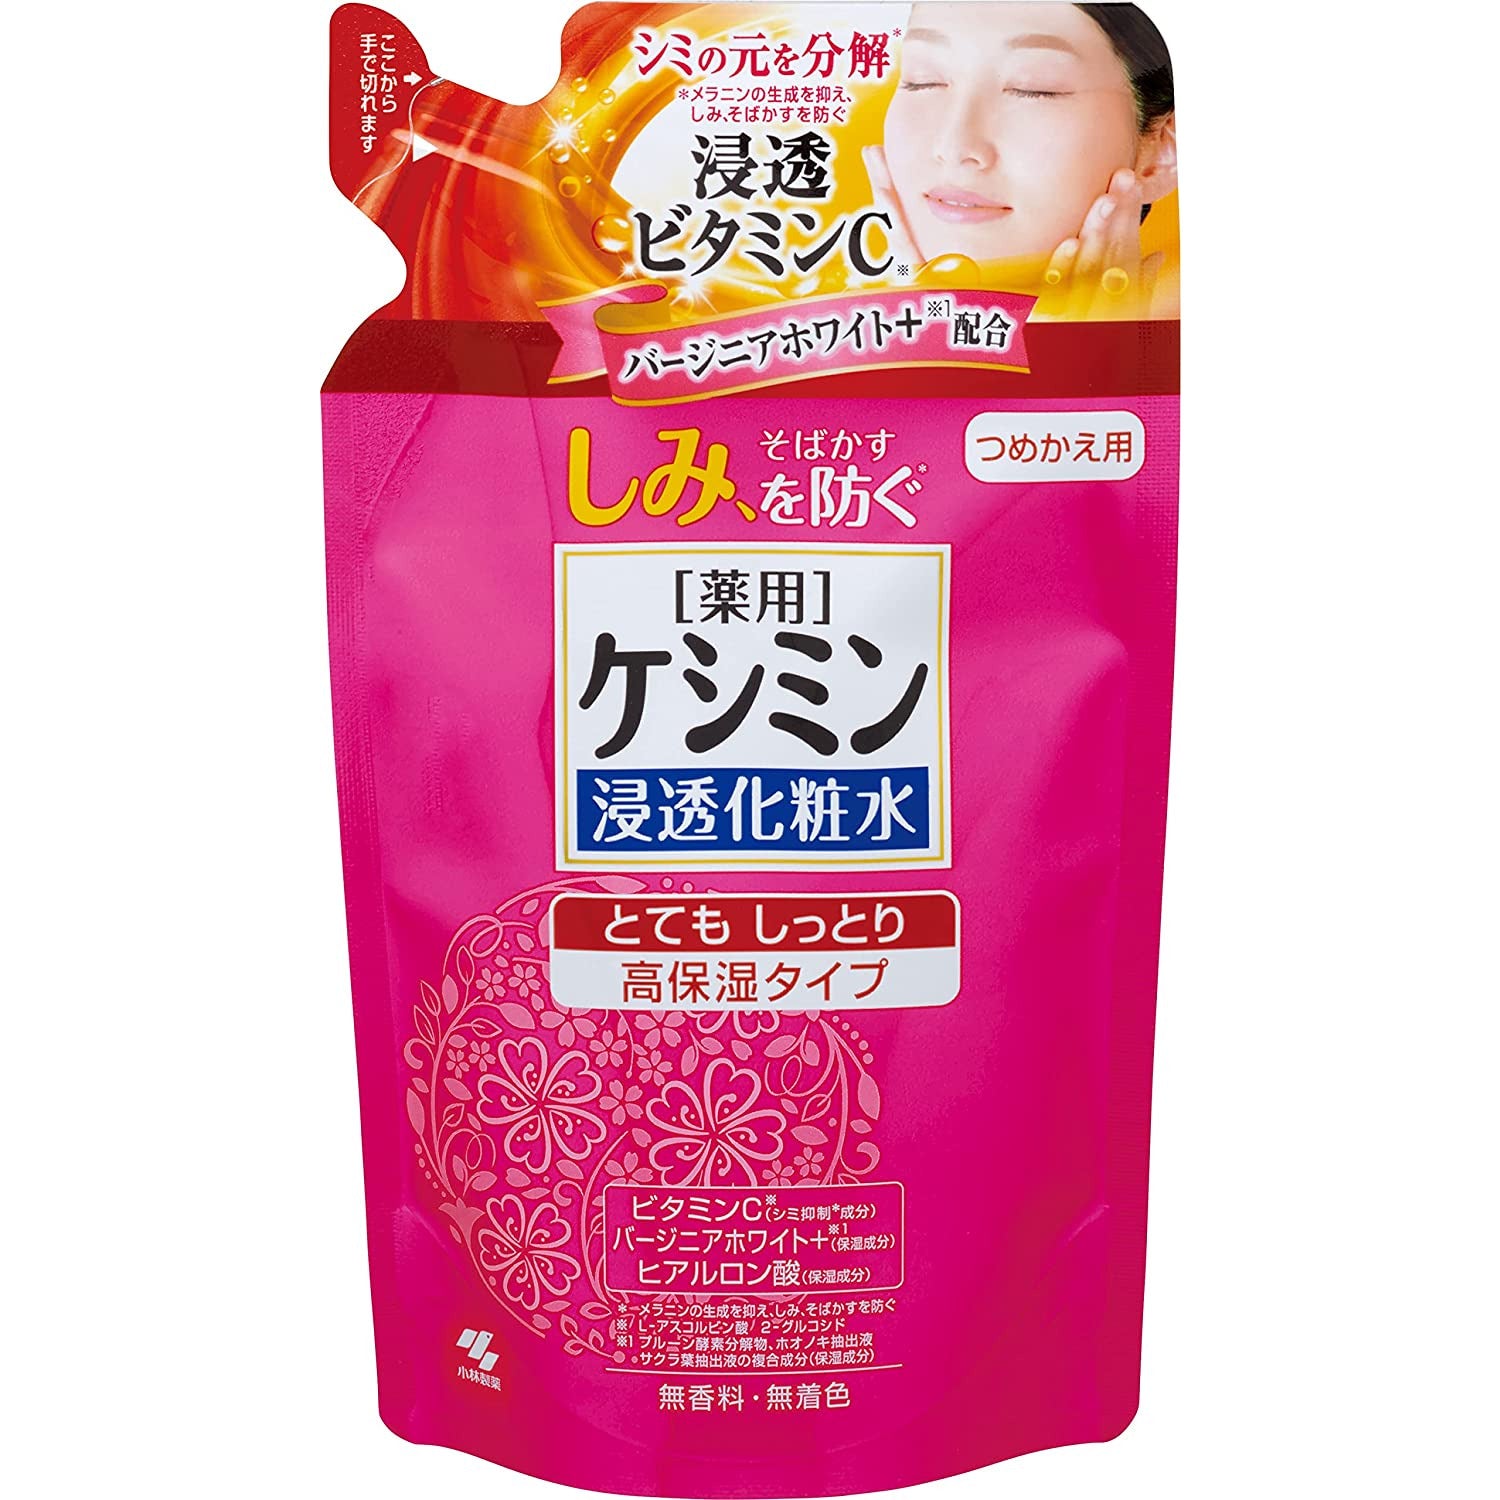 Kobayashi Keshimin penetration lotion very moist refill 140ml